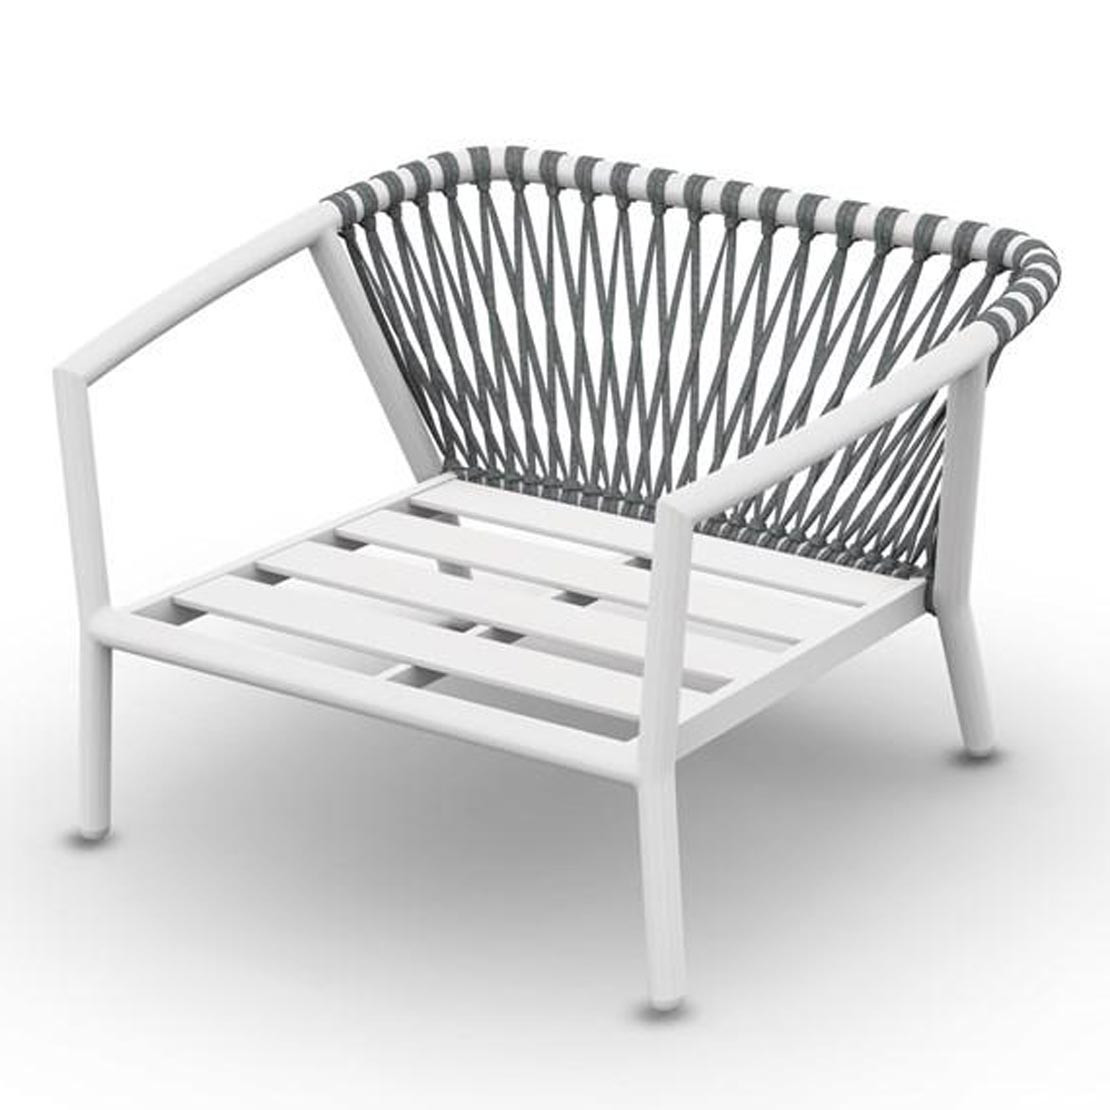 Kapra Sofa 1-Seat Lounge Chair Alu White Mat Rope Open Cross Weaving L Grey Melange